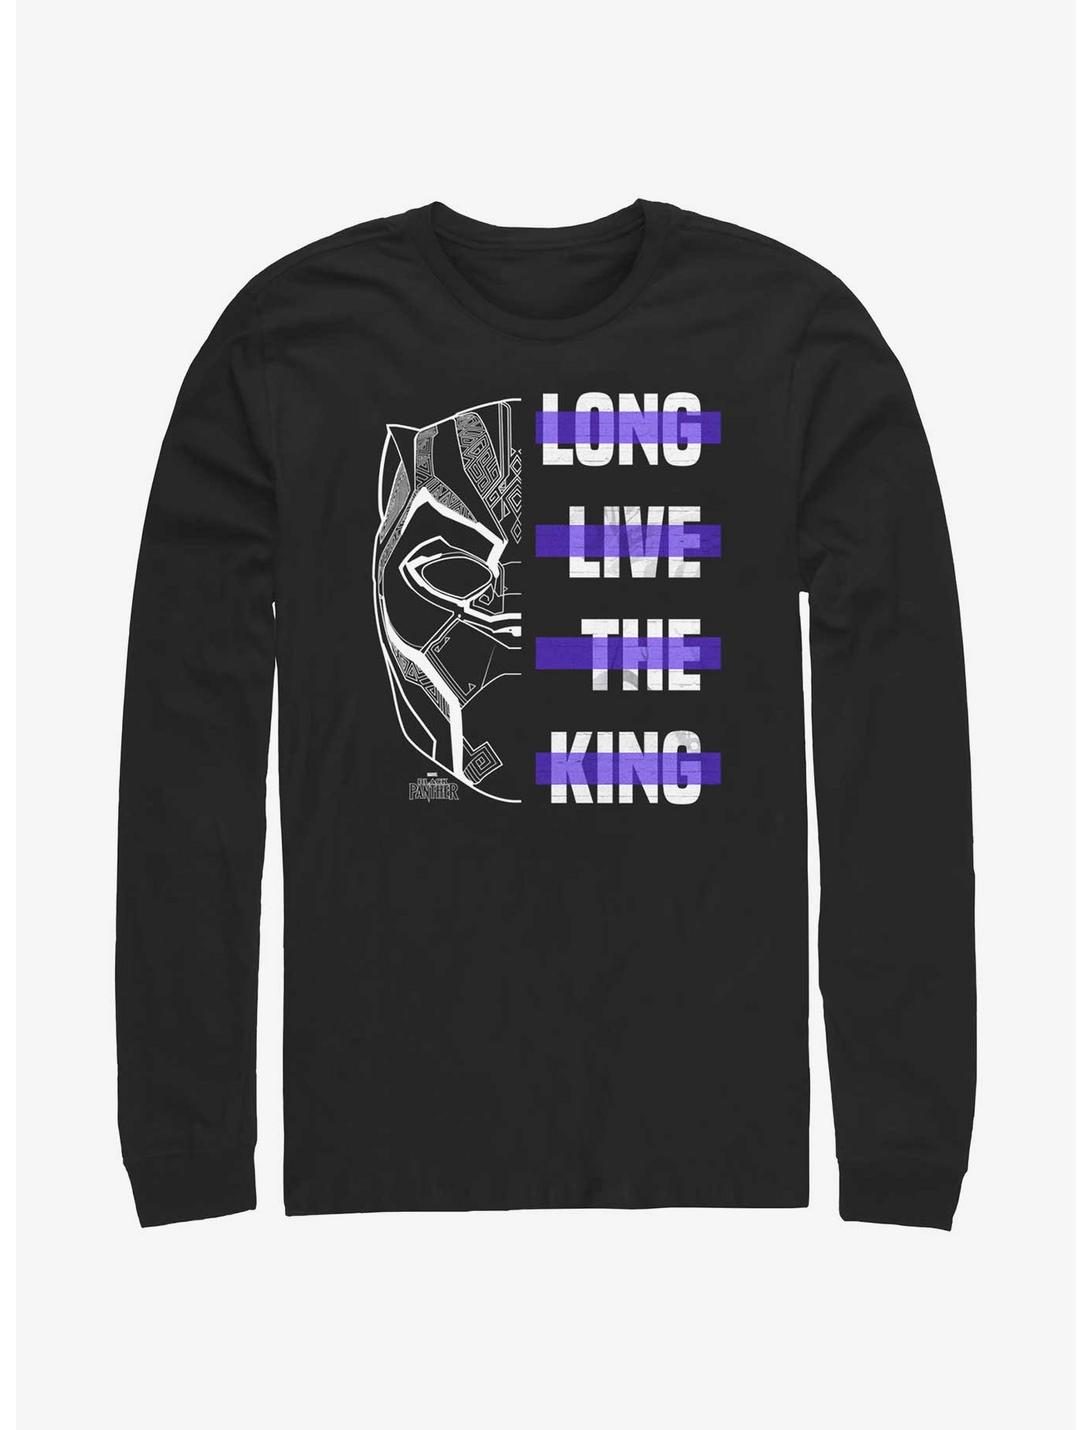 Plus Size Marvel Black Panther Long Live The King Long-Sleeve T-Shirt, BLACK, hi-res